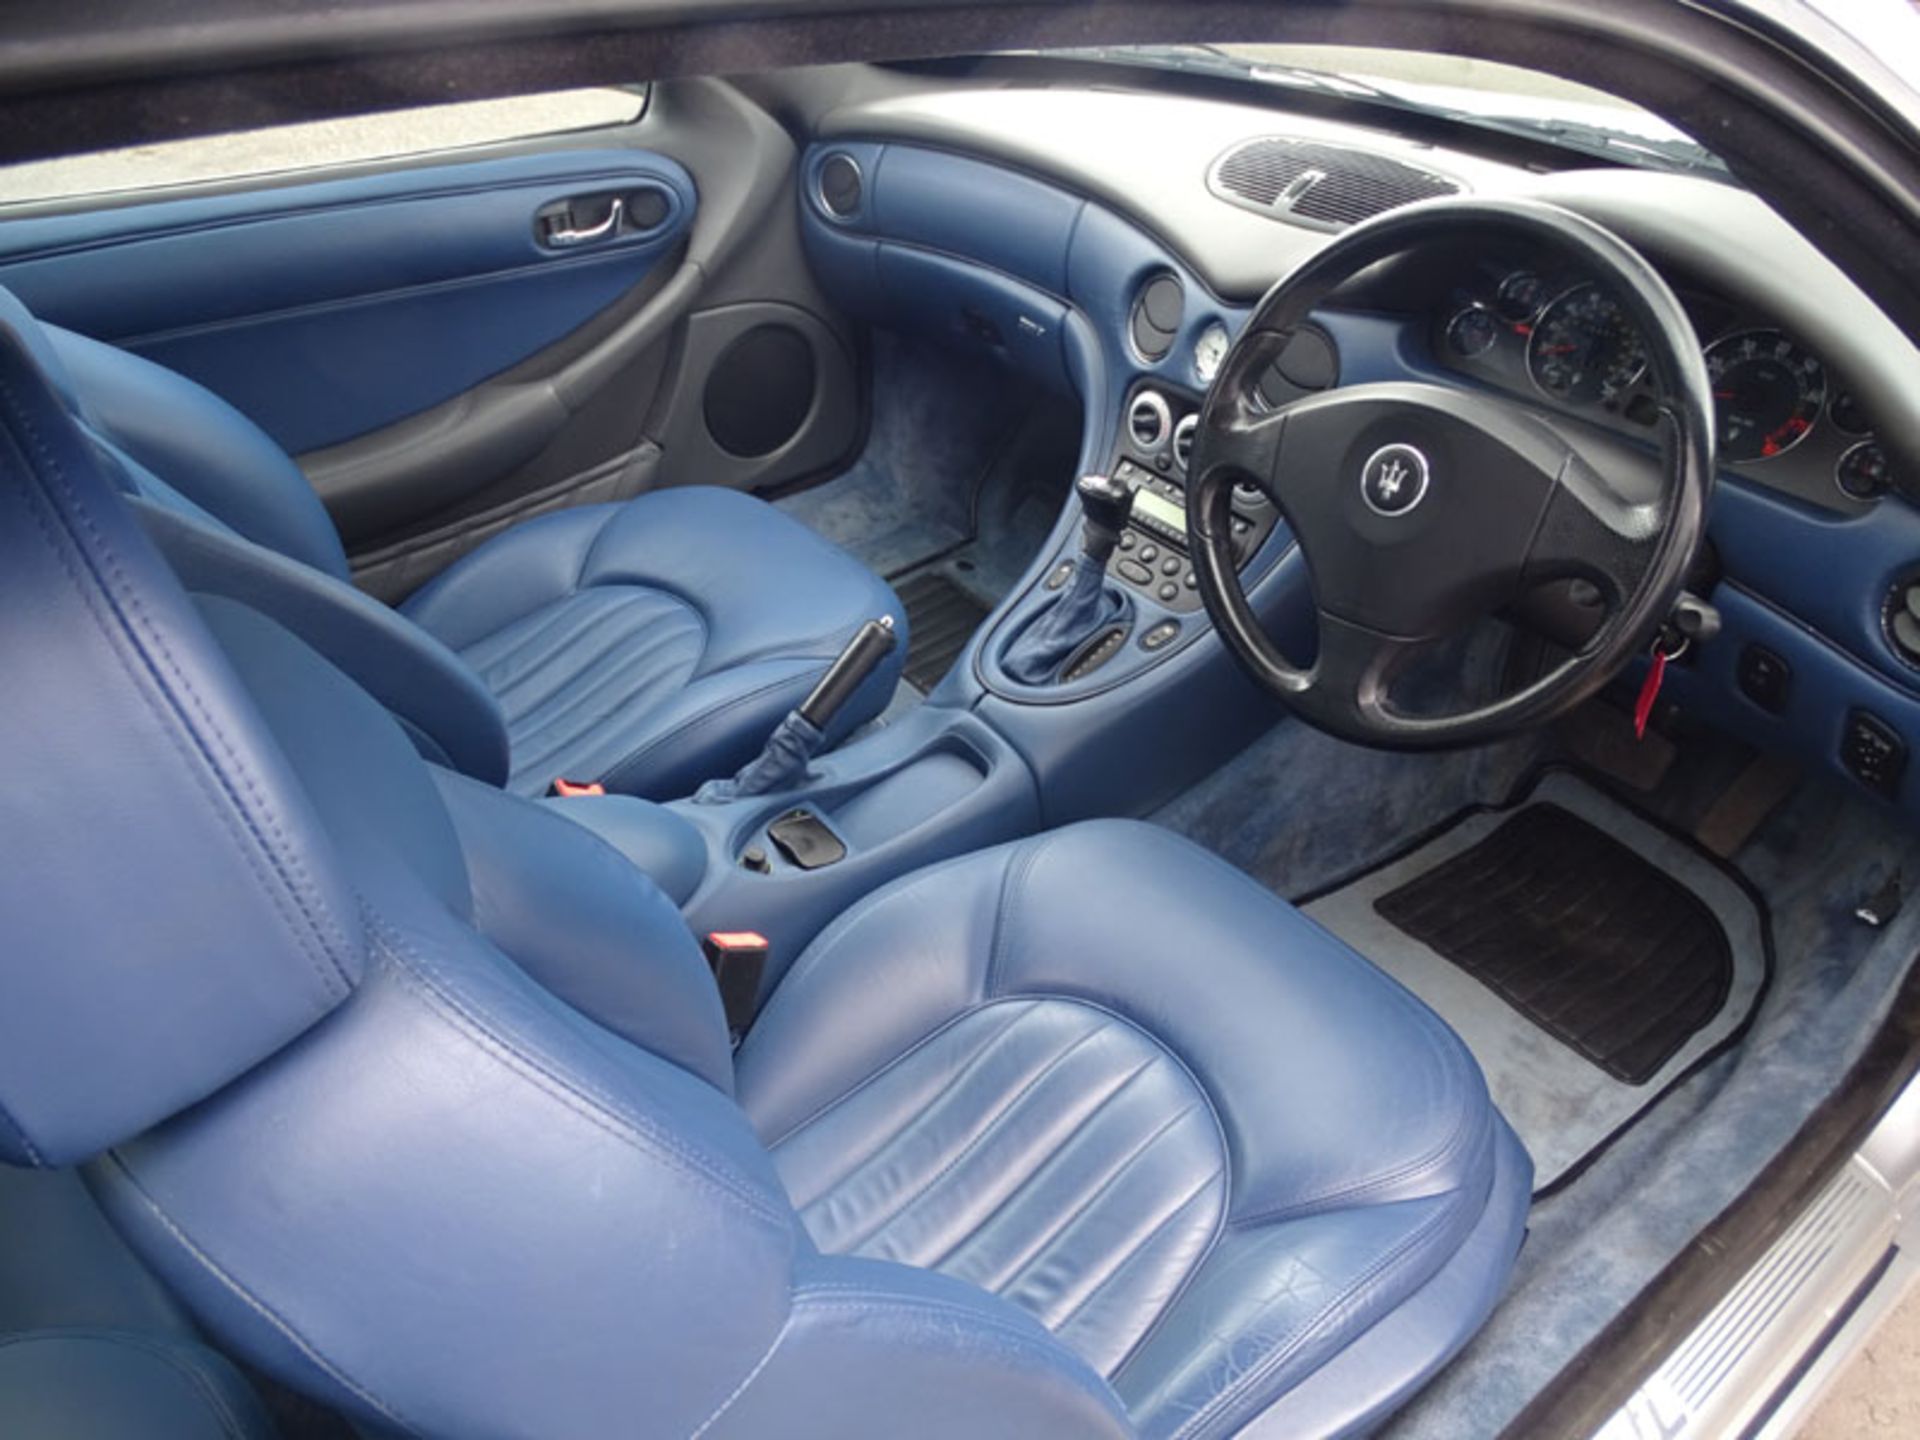 1999 Maserati 3200 GTA - Image 3 of 10